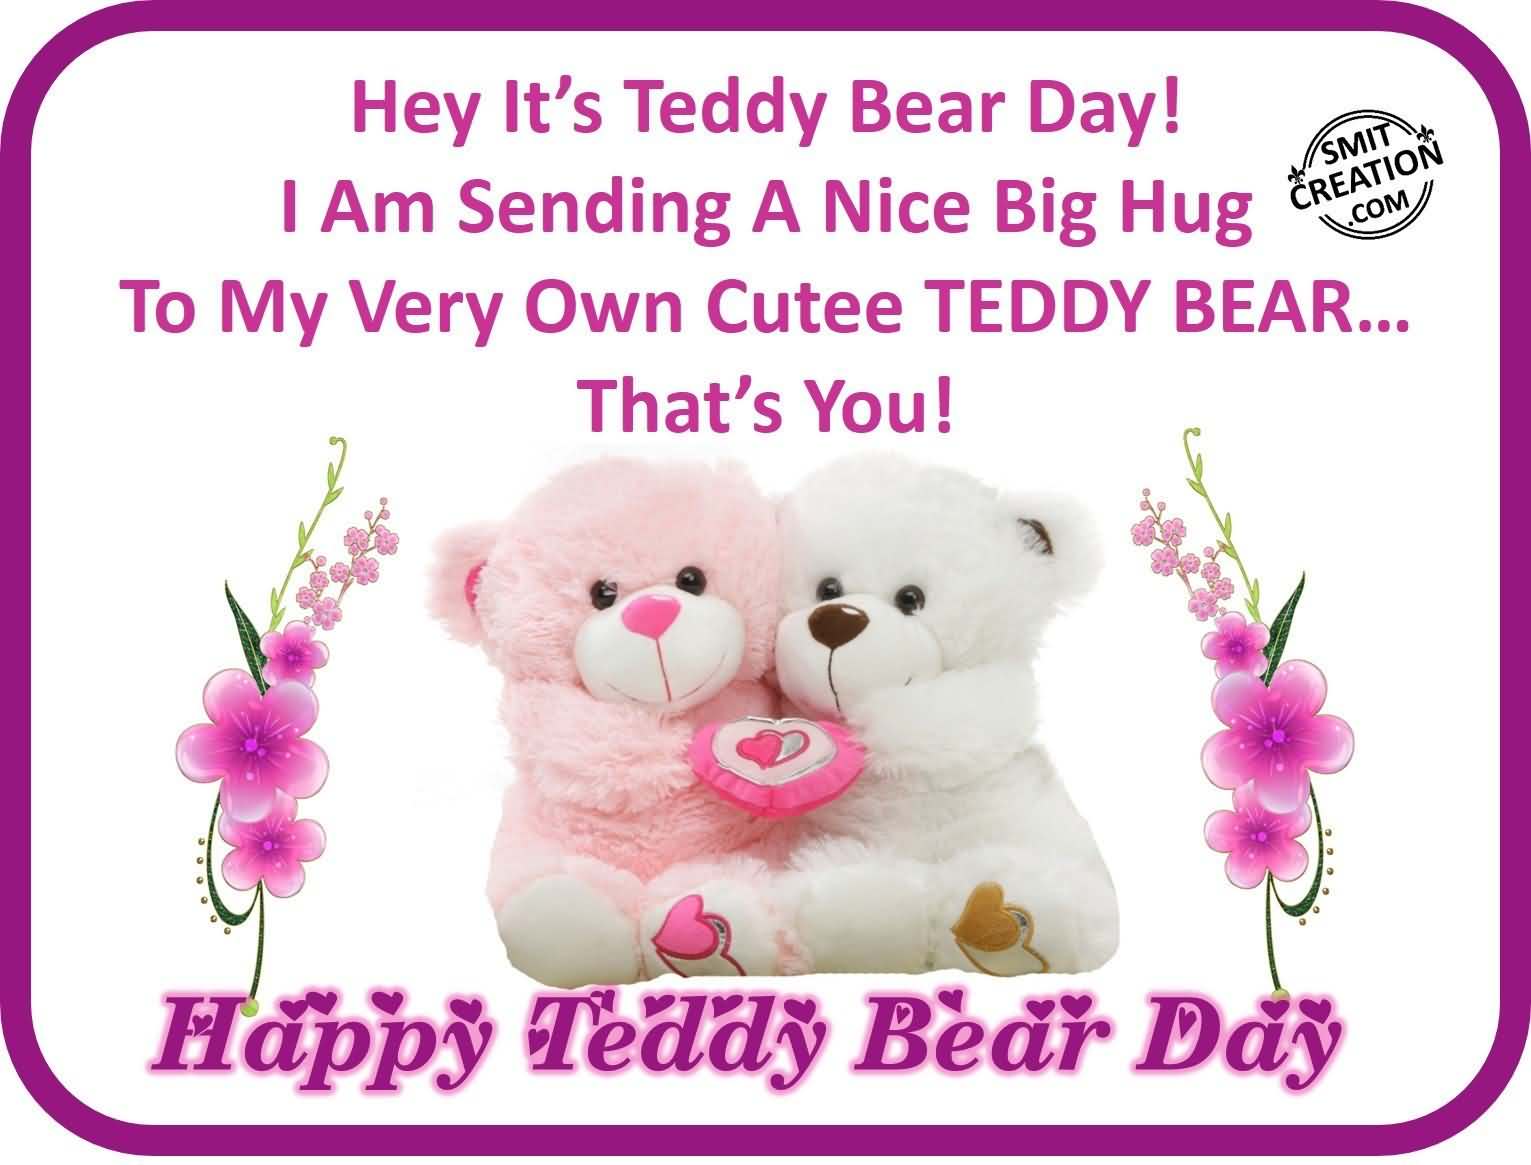 Hey it’s teddy bear day i am sending a nice big hug to my very own cutee teddy bear that’s you